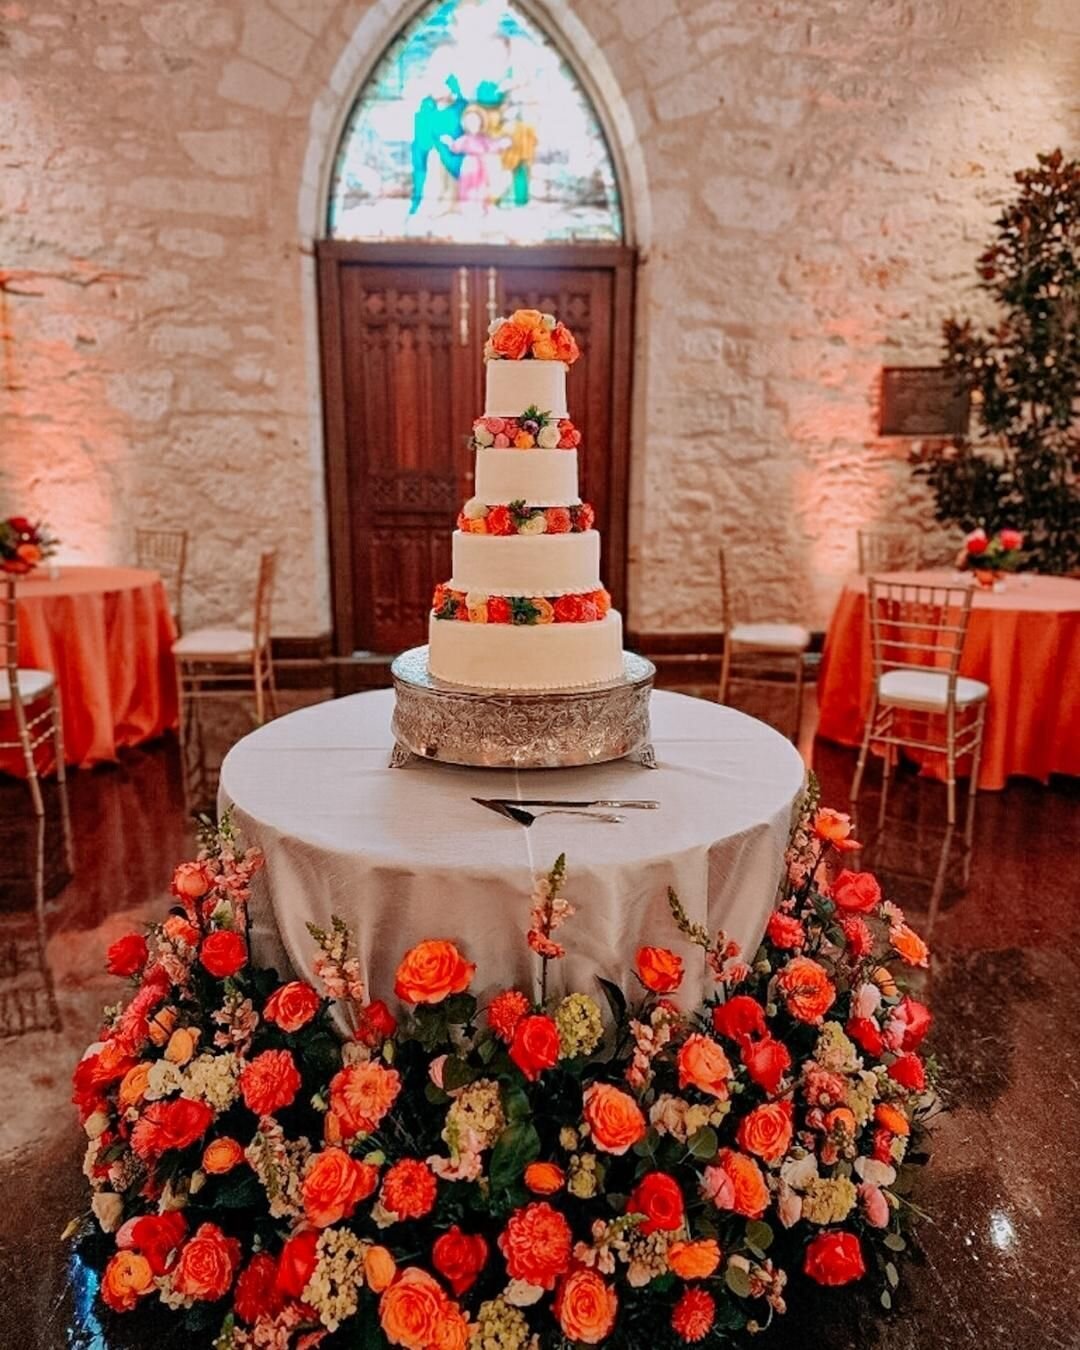 We like to get Southwest-Art-And-Crafty from time to time! #cakesbycathyyoung #wedding #weddingcake #cake #cakedesign #cakedesigner #cakesofinstagram #sanantonioweddings #weddingsinsanantonio